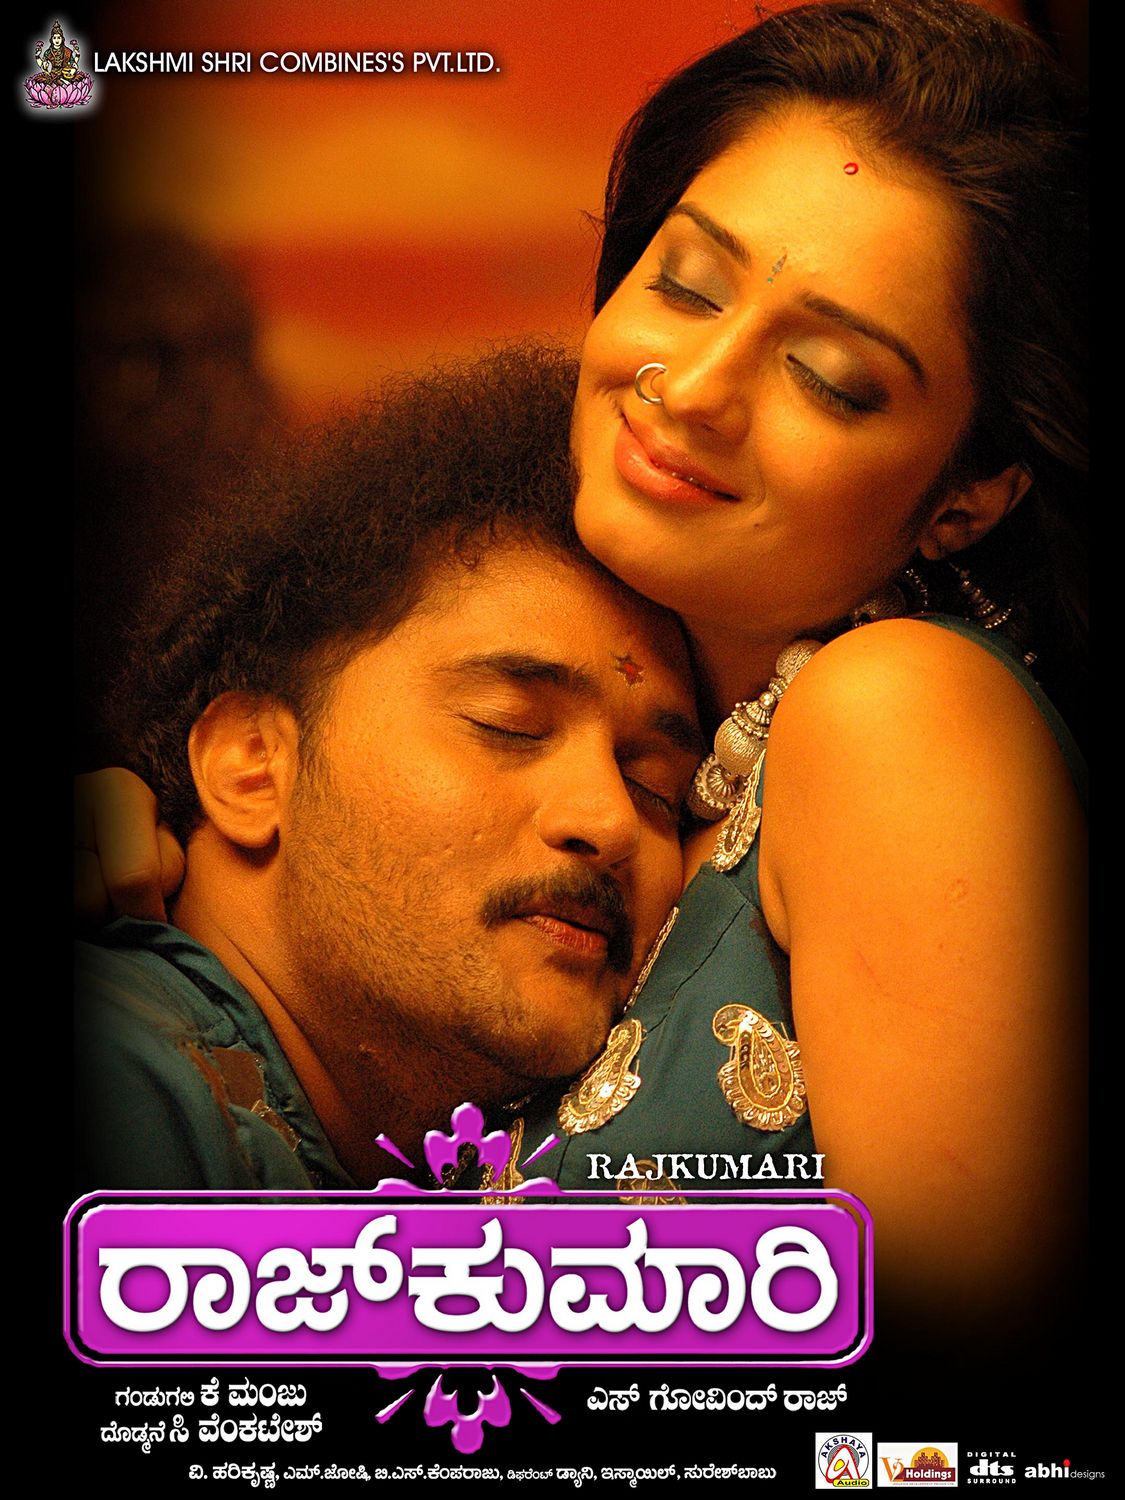 Extra Large Movie Poster Image for Rajkumari (#1 of 20)